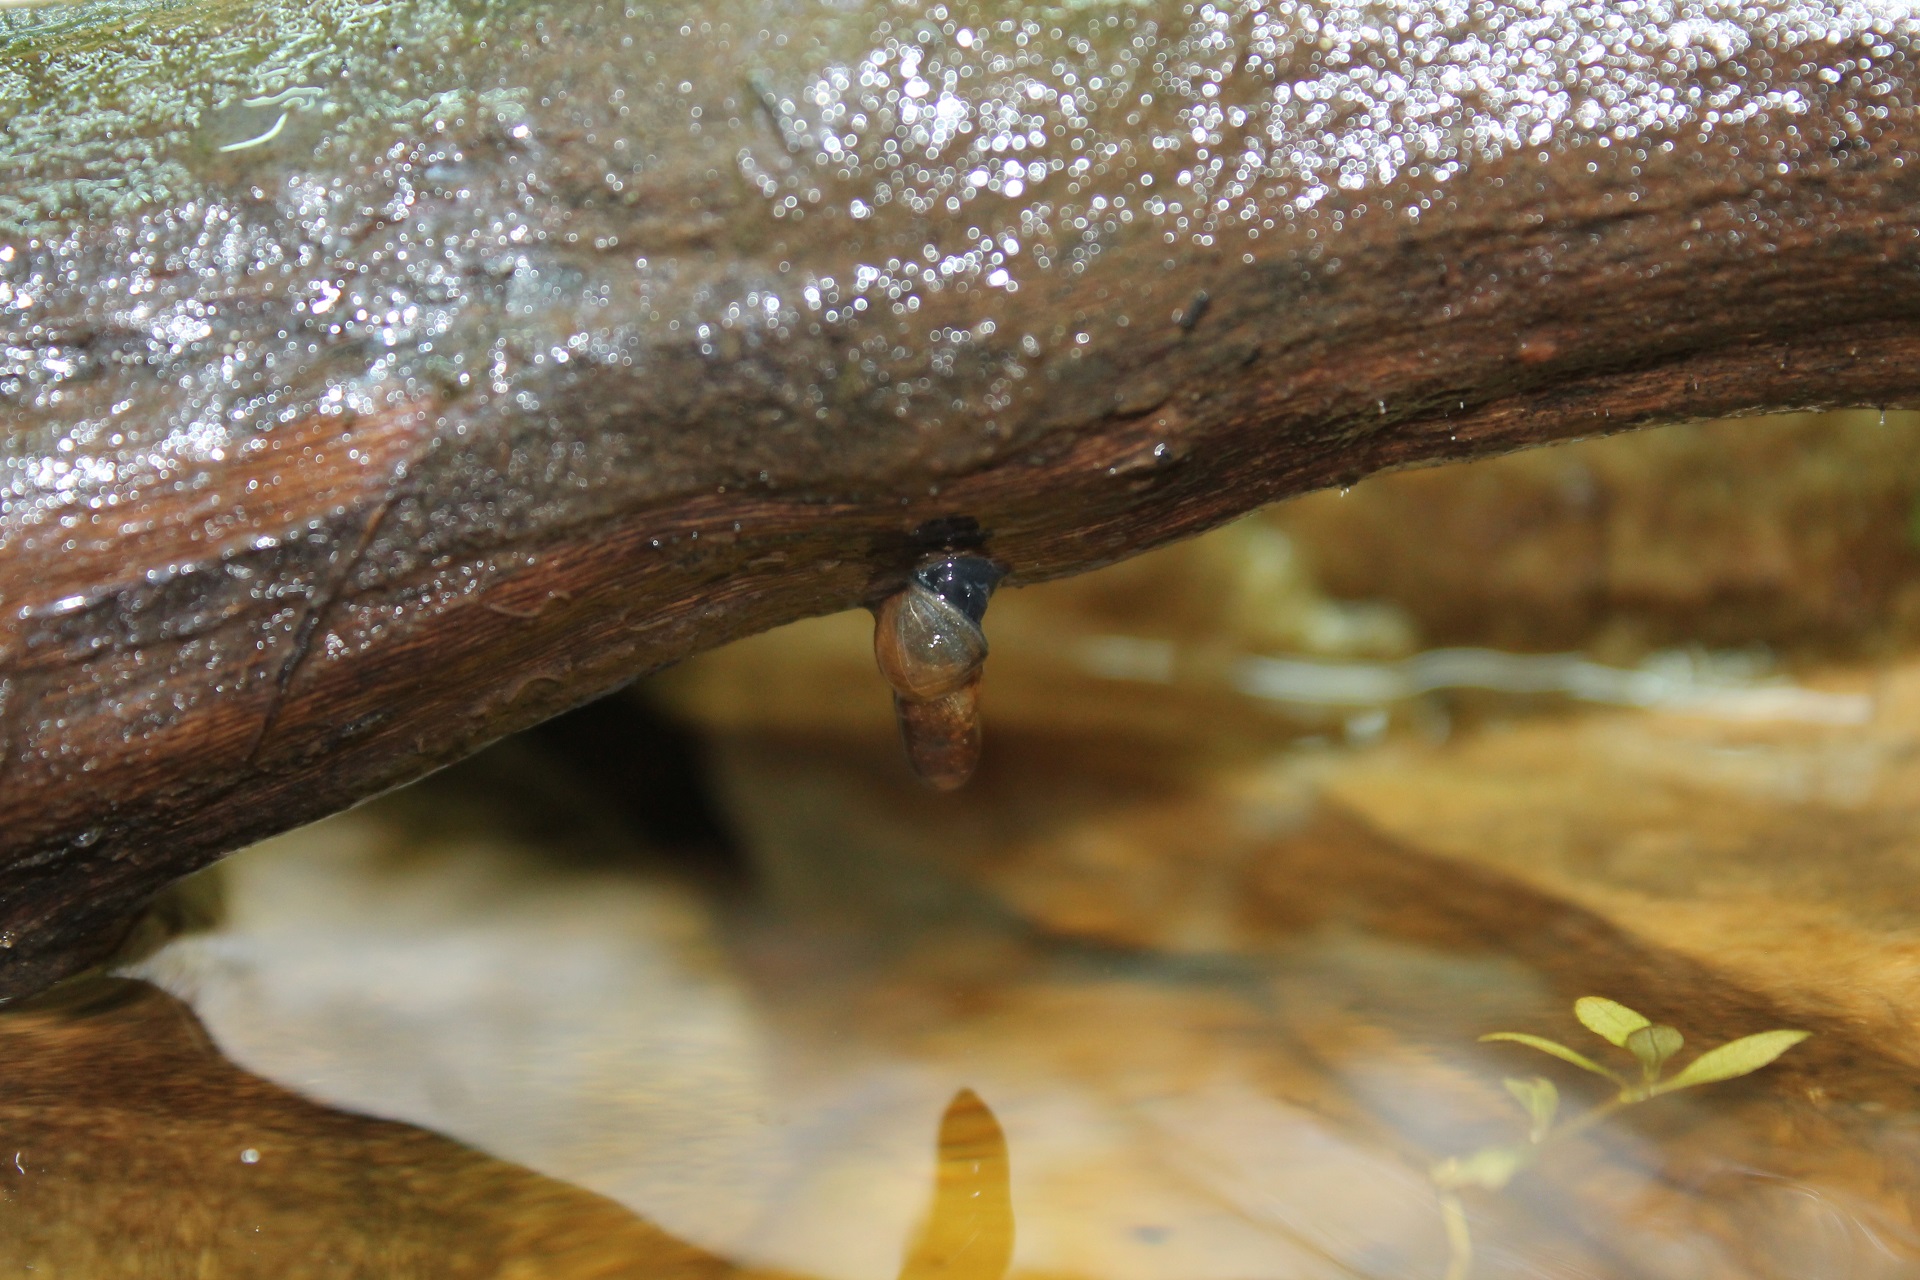 Pond mud snail in wild hanging from branch

IMAGE: Ben Harrower 2015